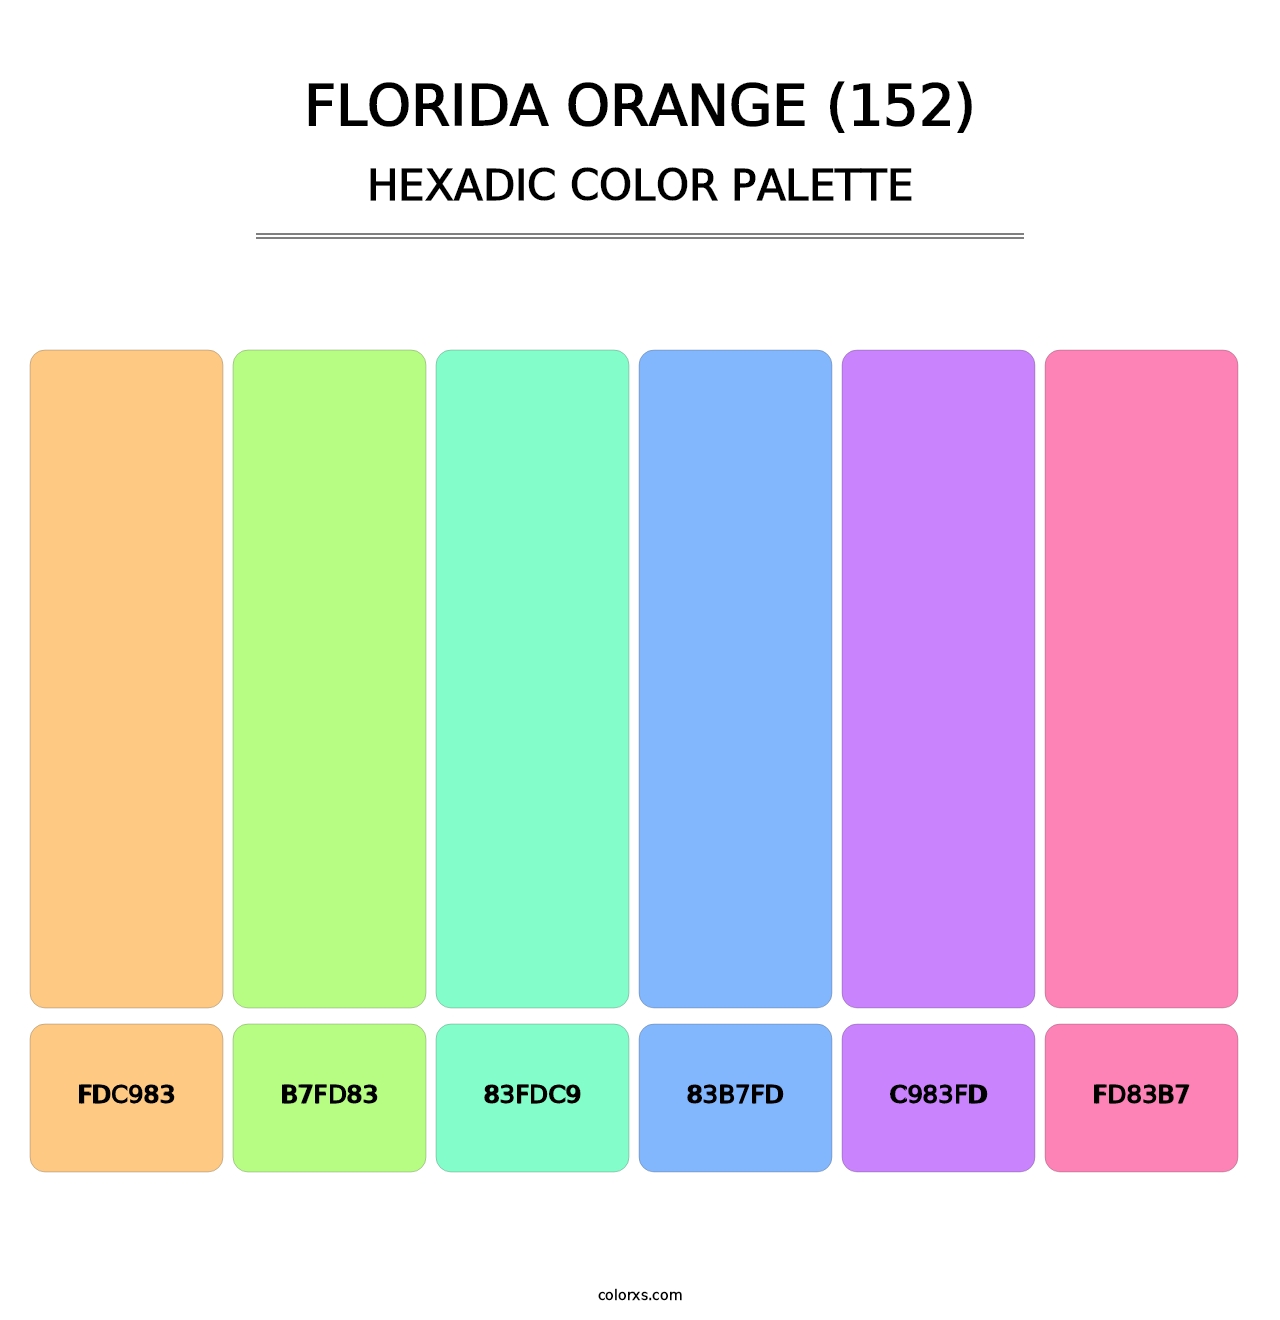 Florida Orange (152) - Hexadic Color Palette